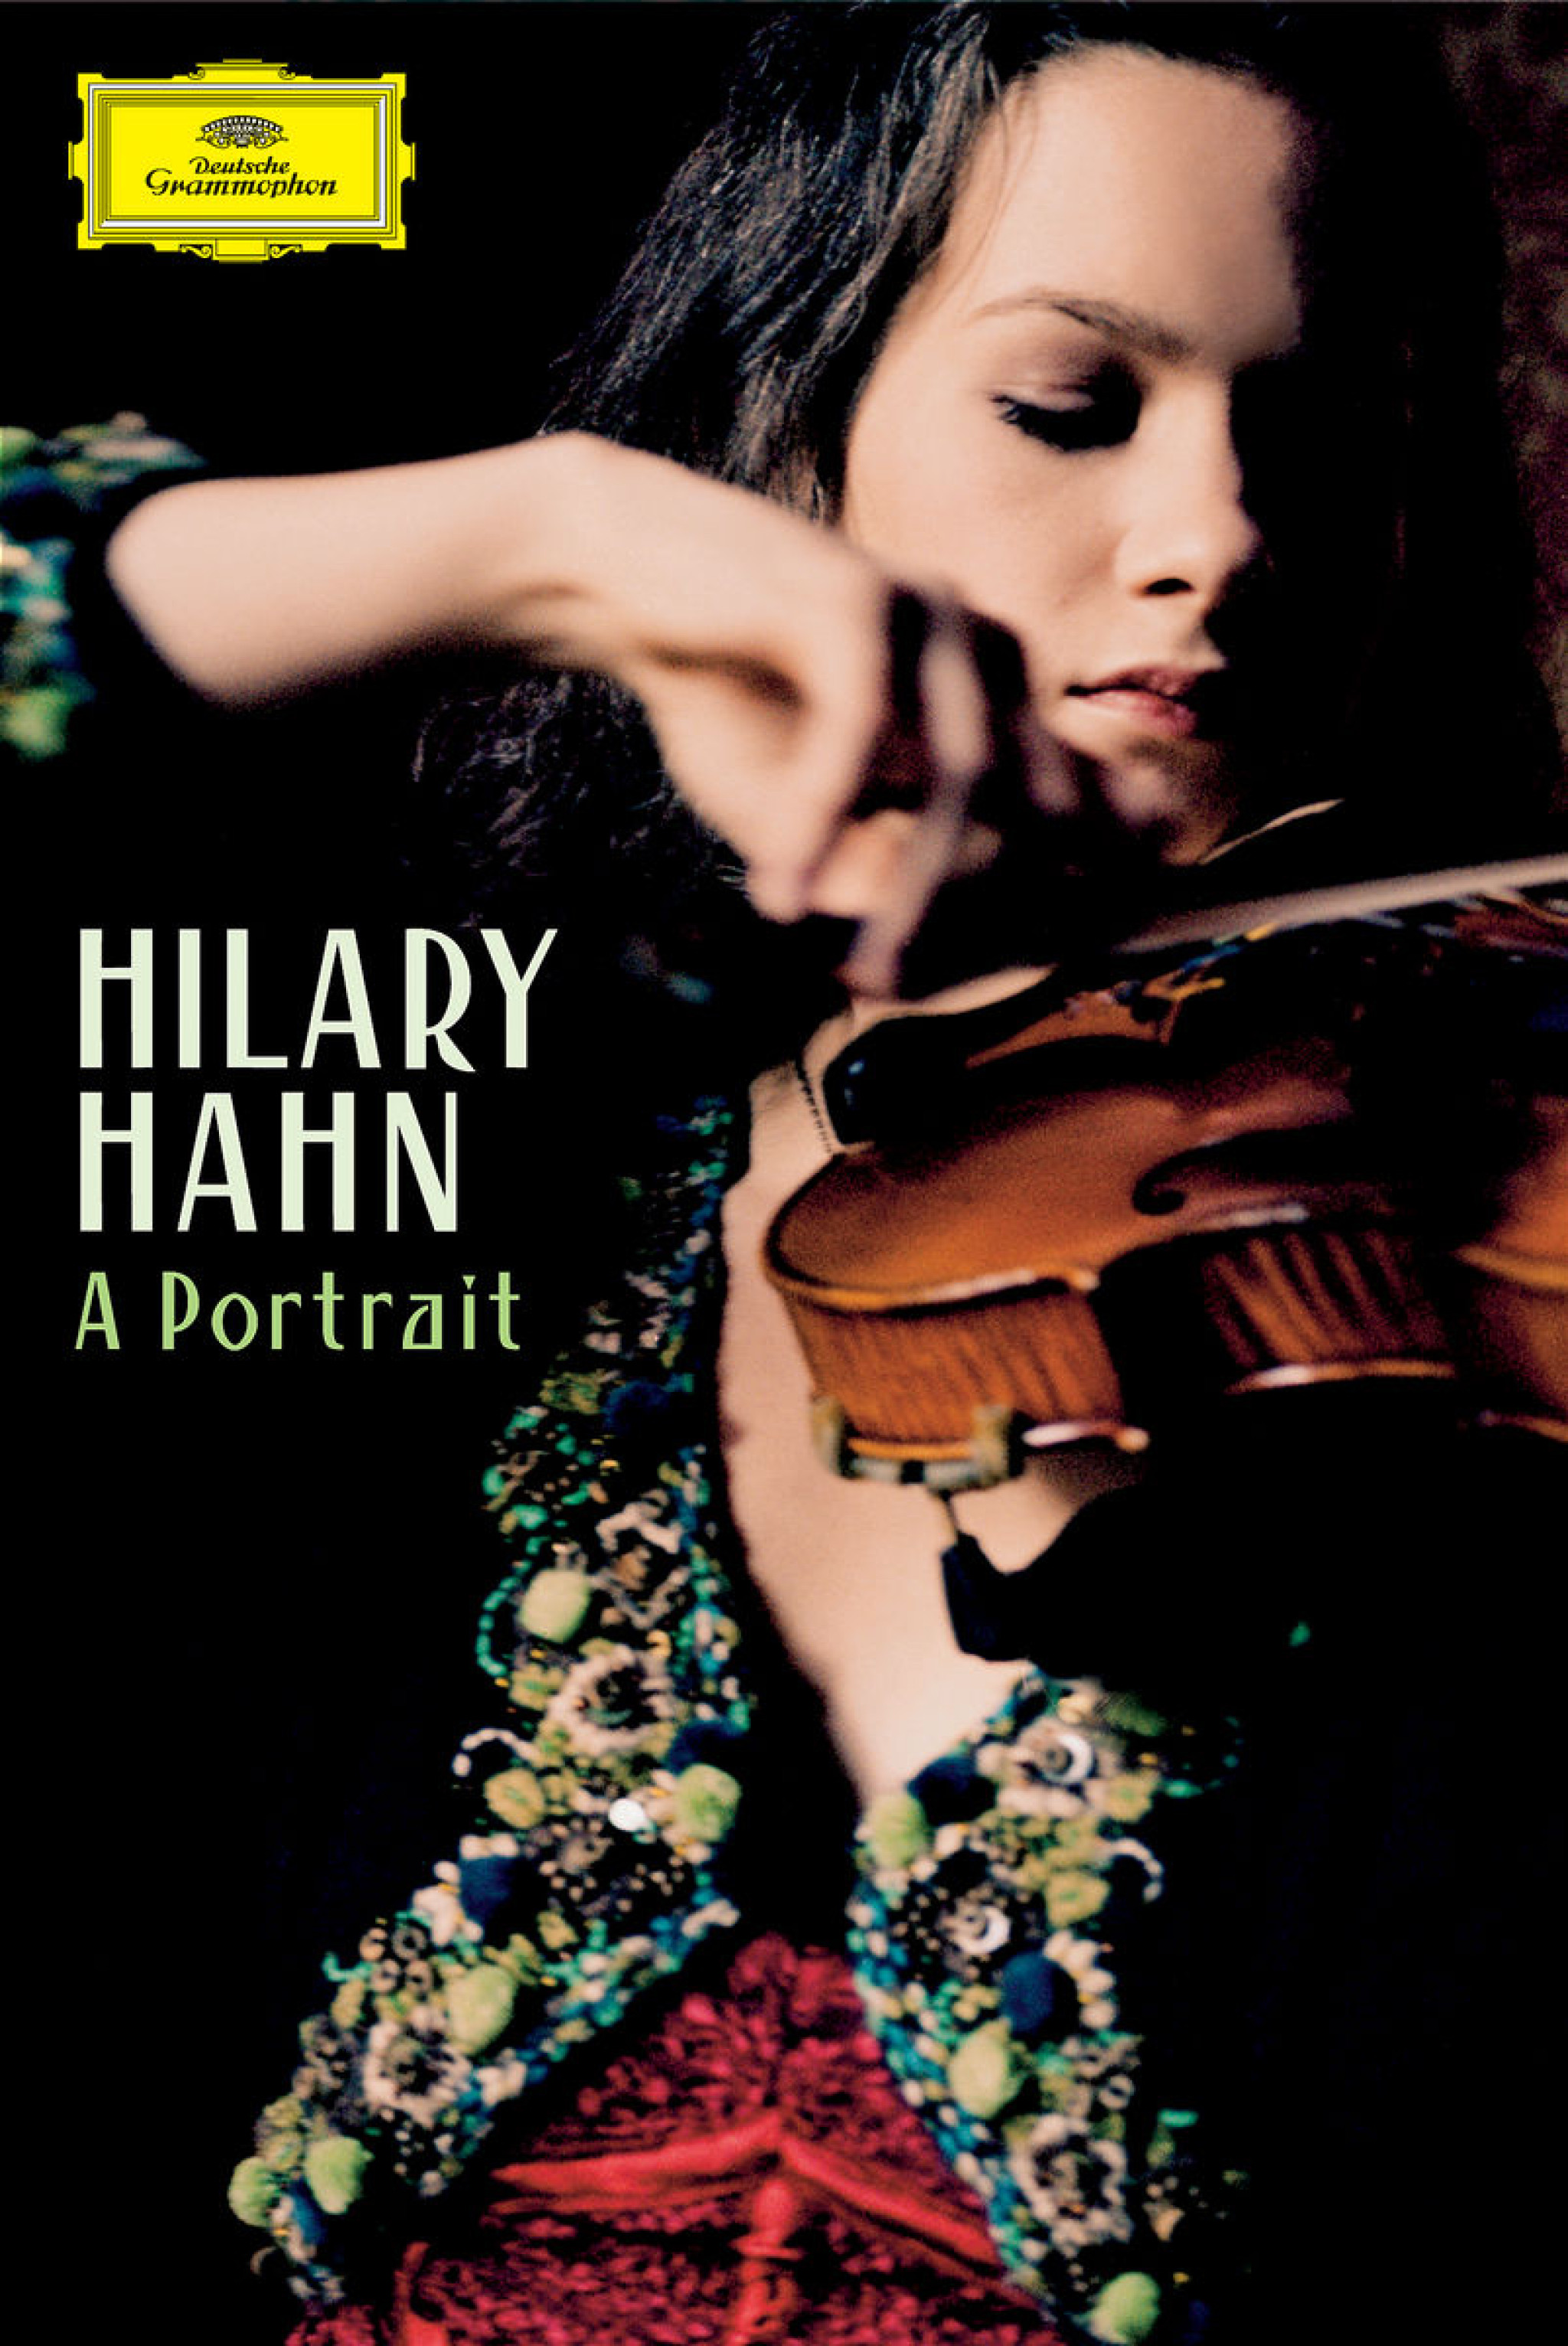 Hilary Hahn - "A Portrait" 0044007341922